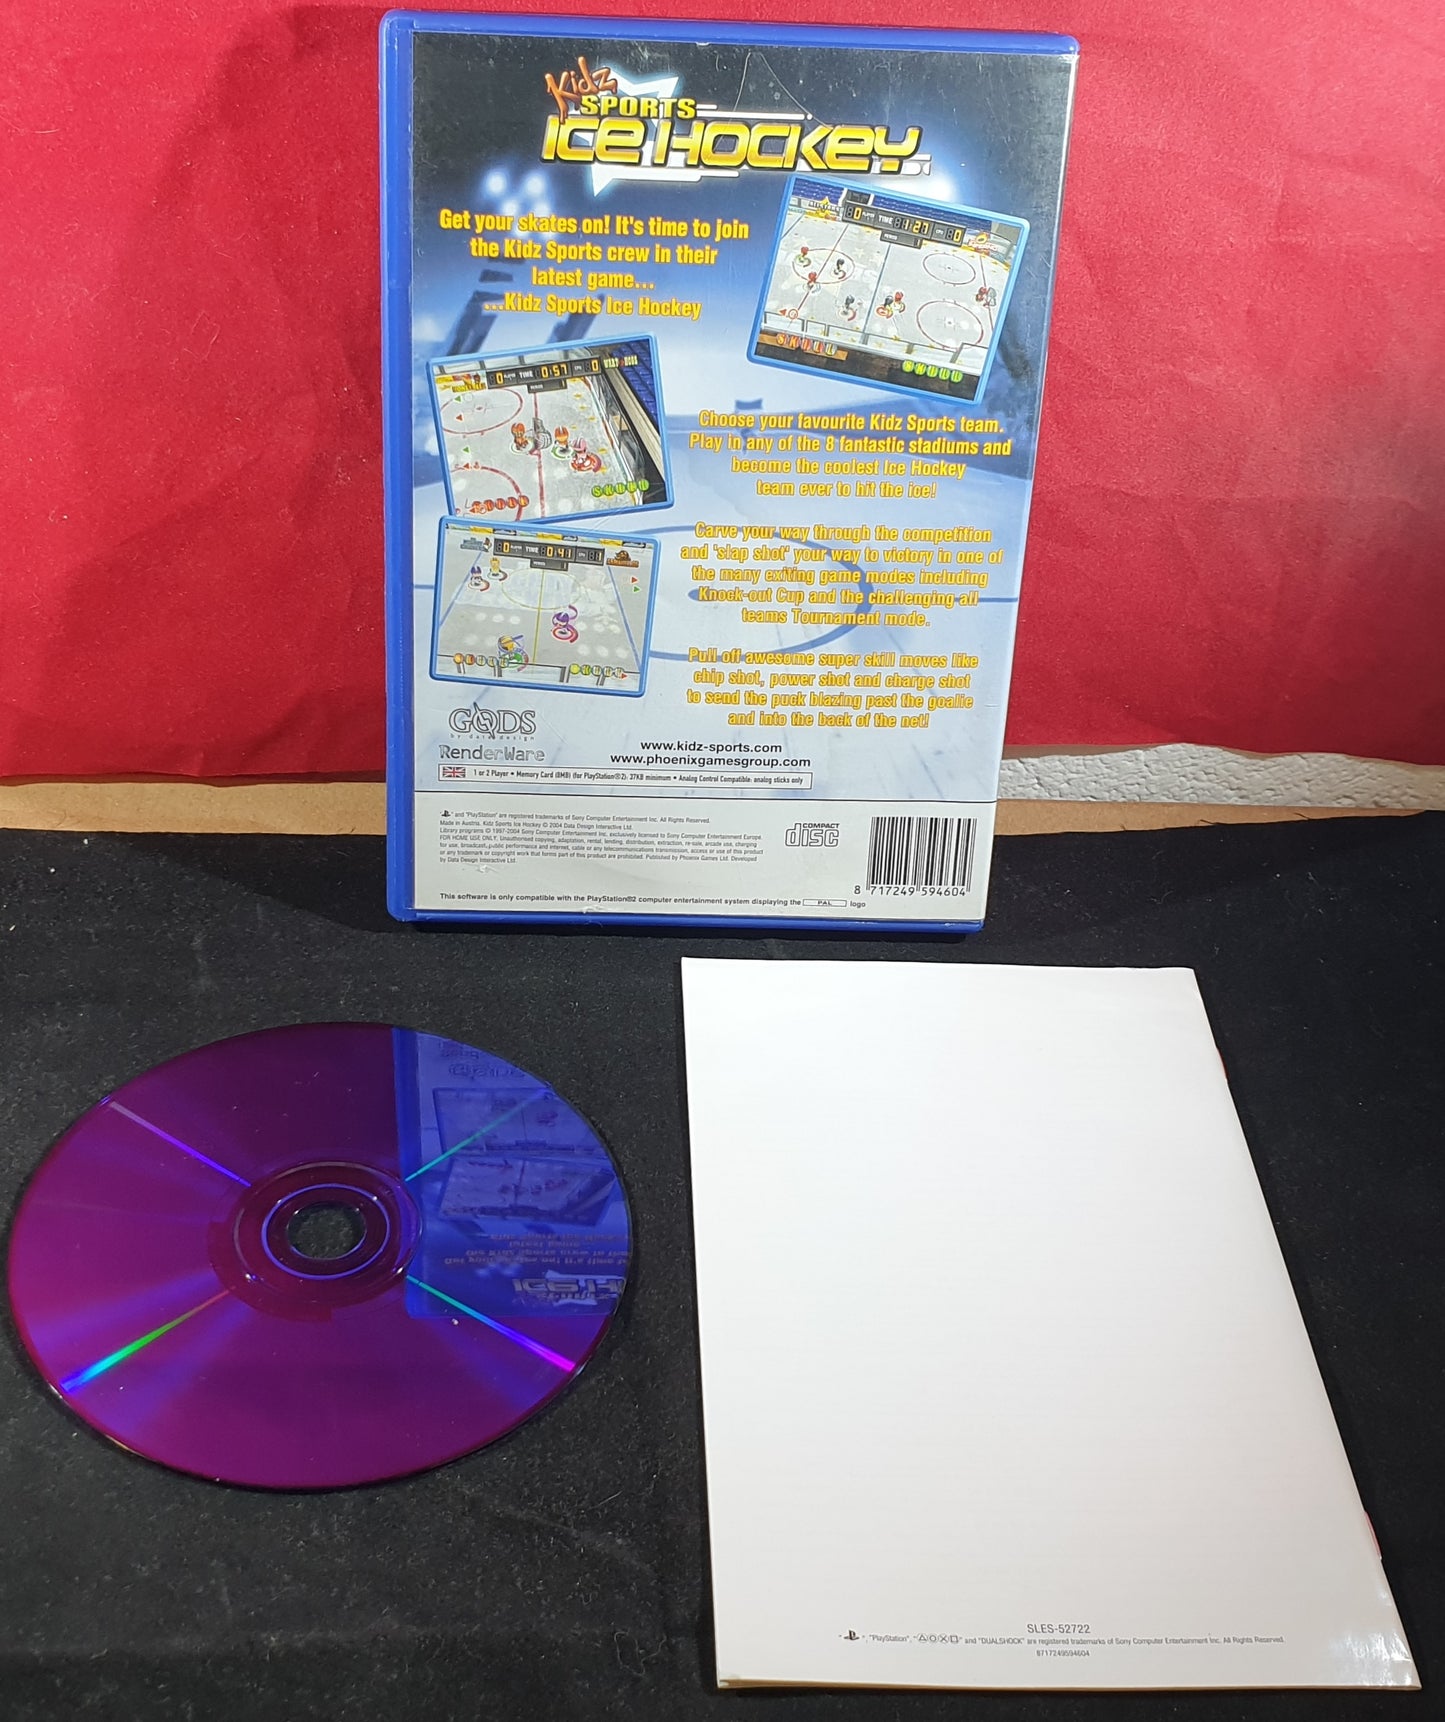 Kidz Sports Ice Hockey Sony Playstation 2 (PS2) Game